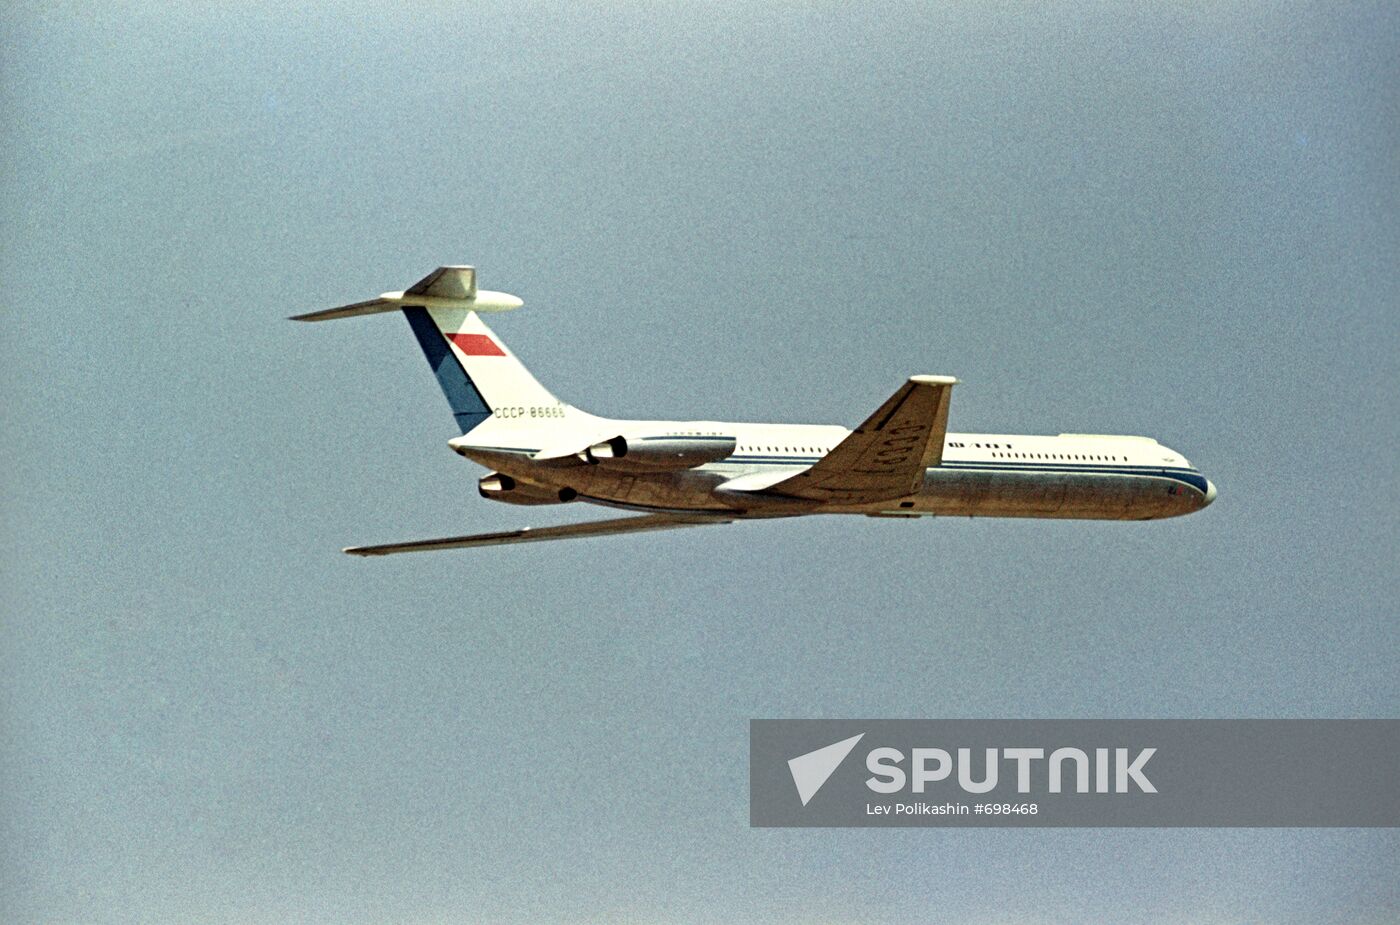 IL-62 air liner in flight